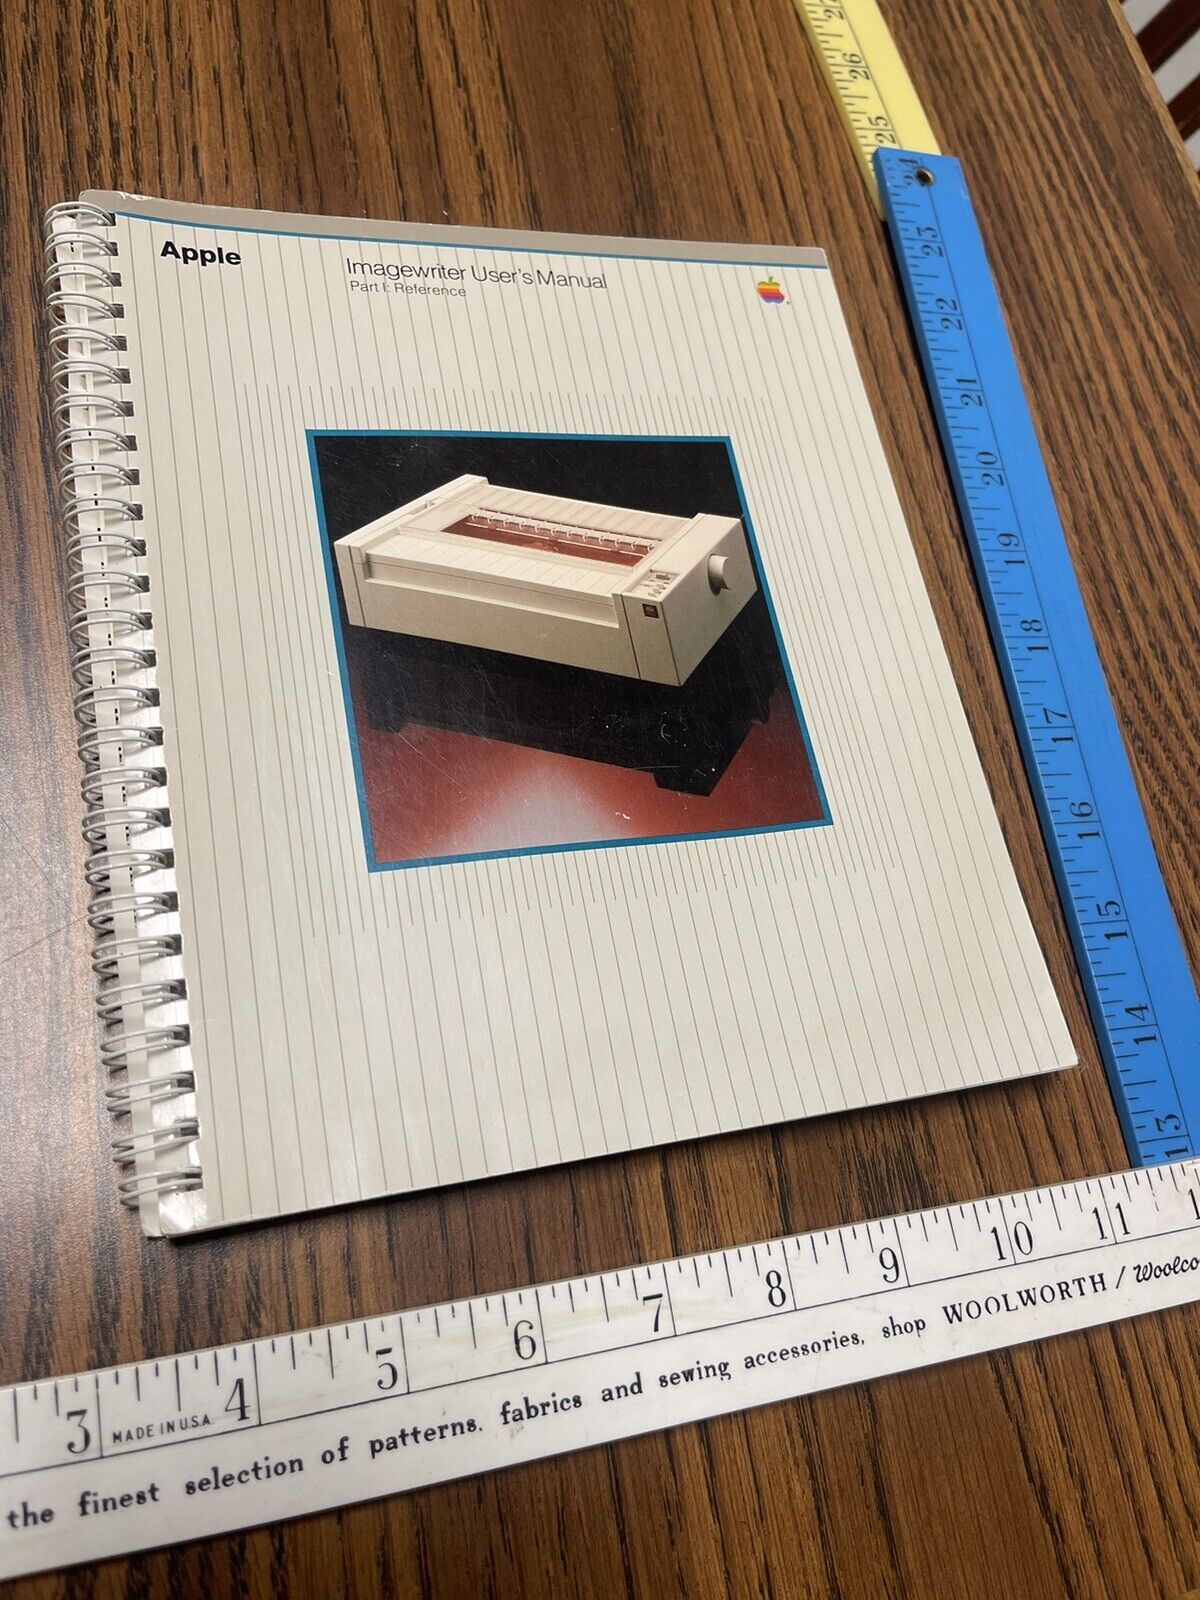 1984 Apple Computer Imagewriter Printer Old Vintage User’s Manual Part 1 Ref.